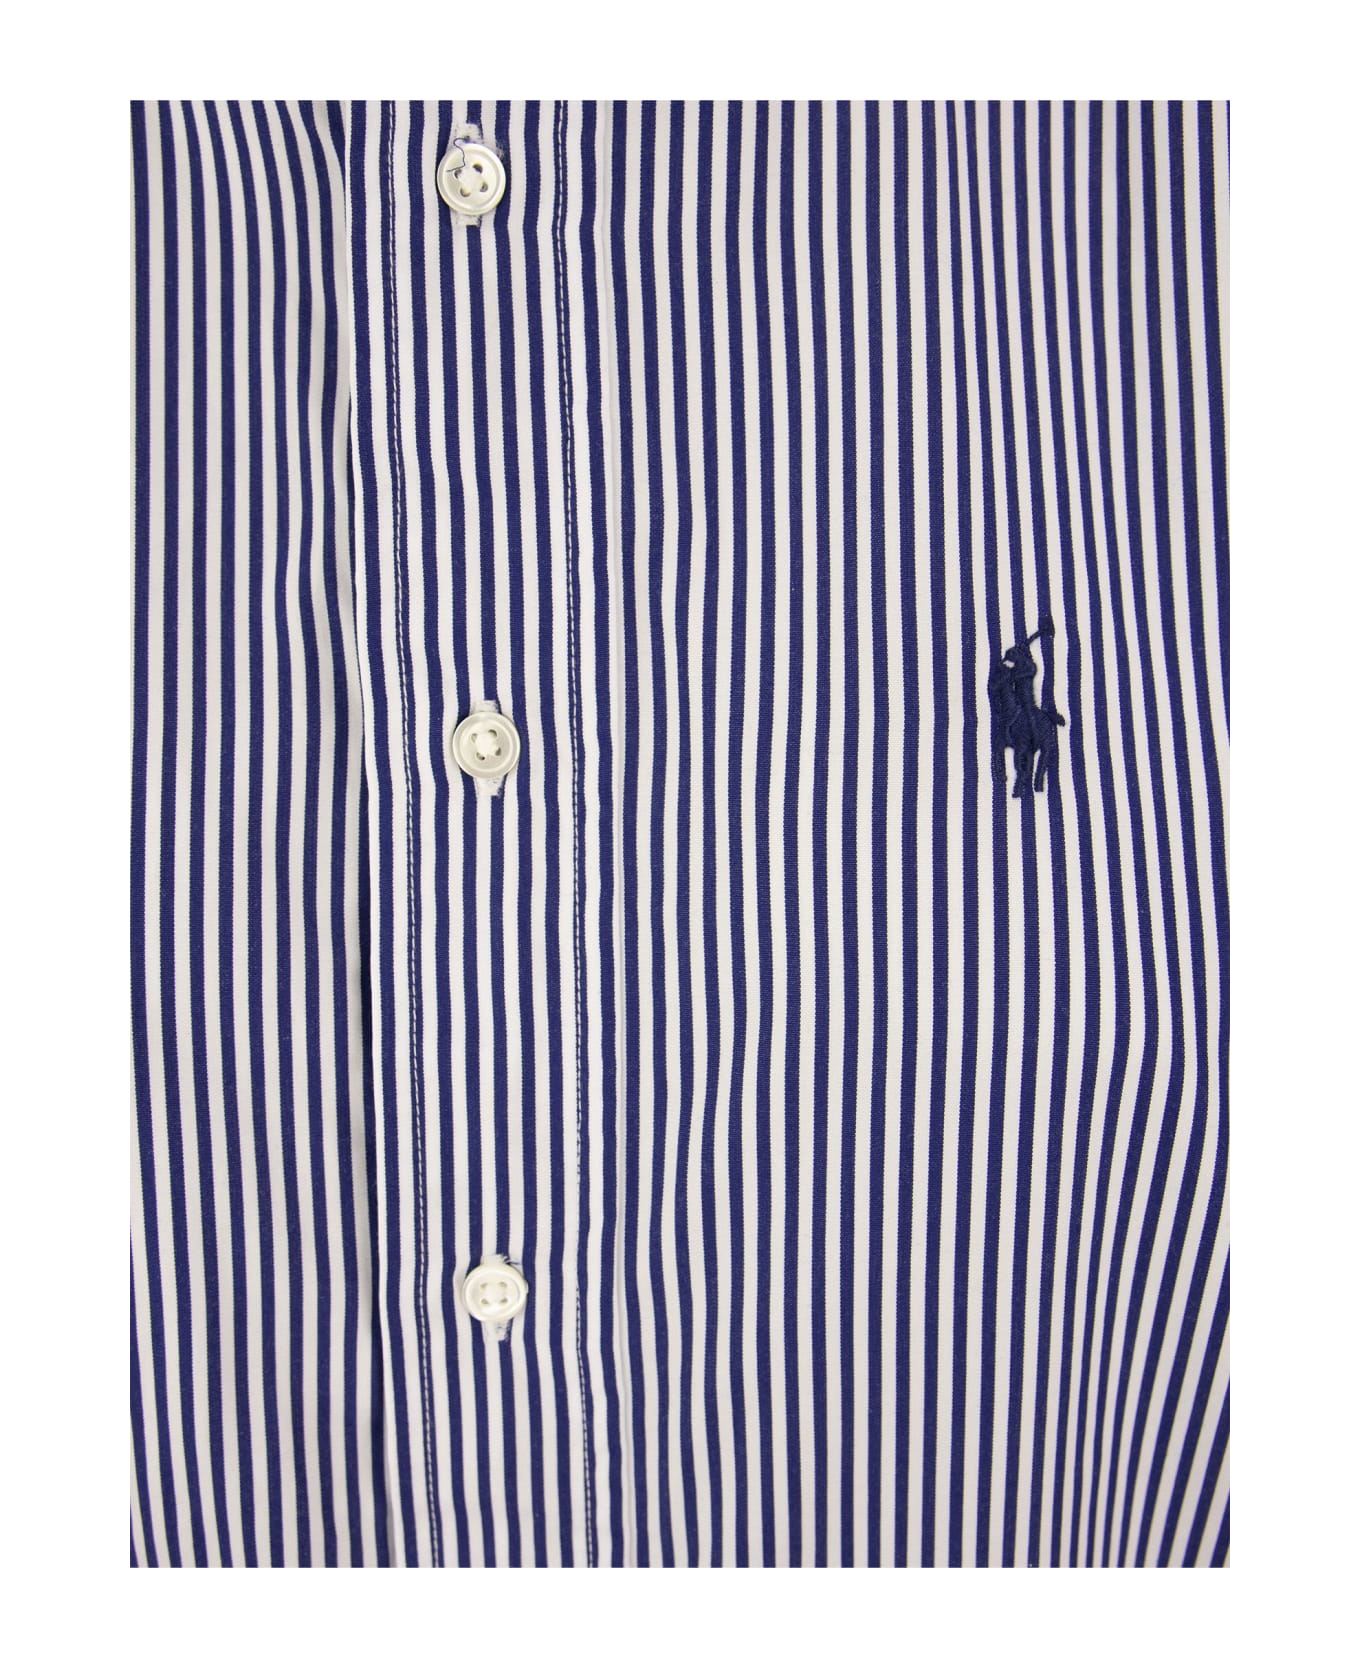 Polo Ralph Lauren Chemisier With Stripes - Blue/white